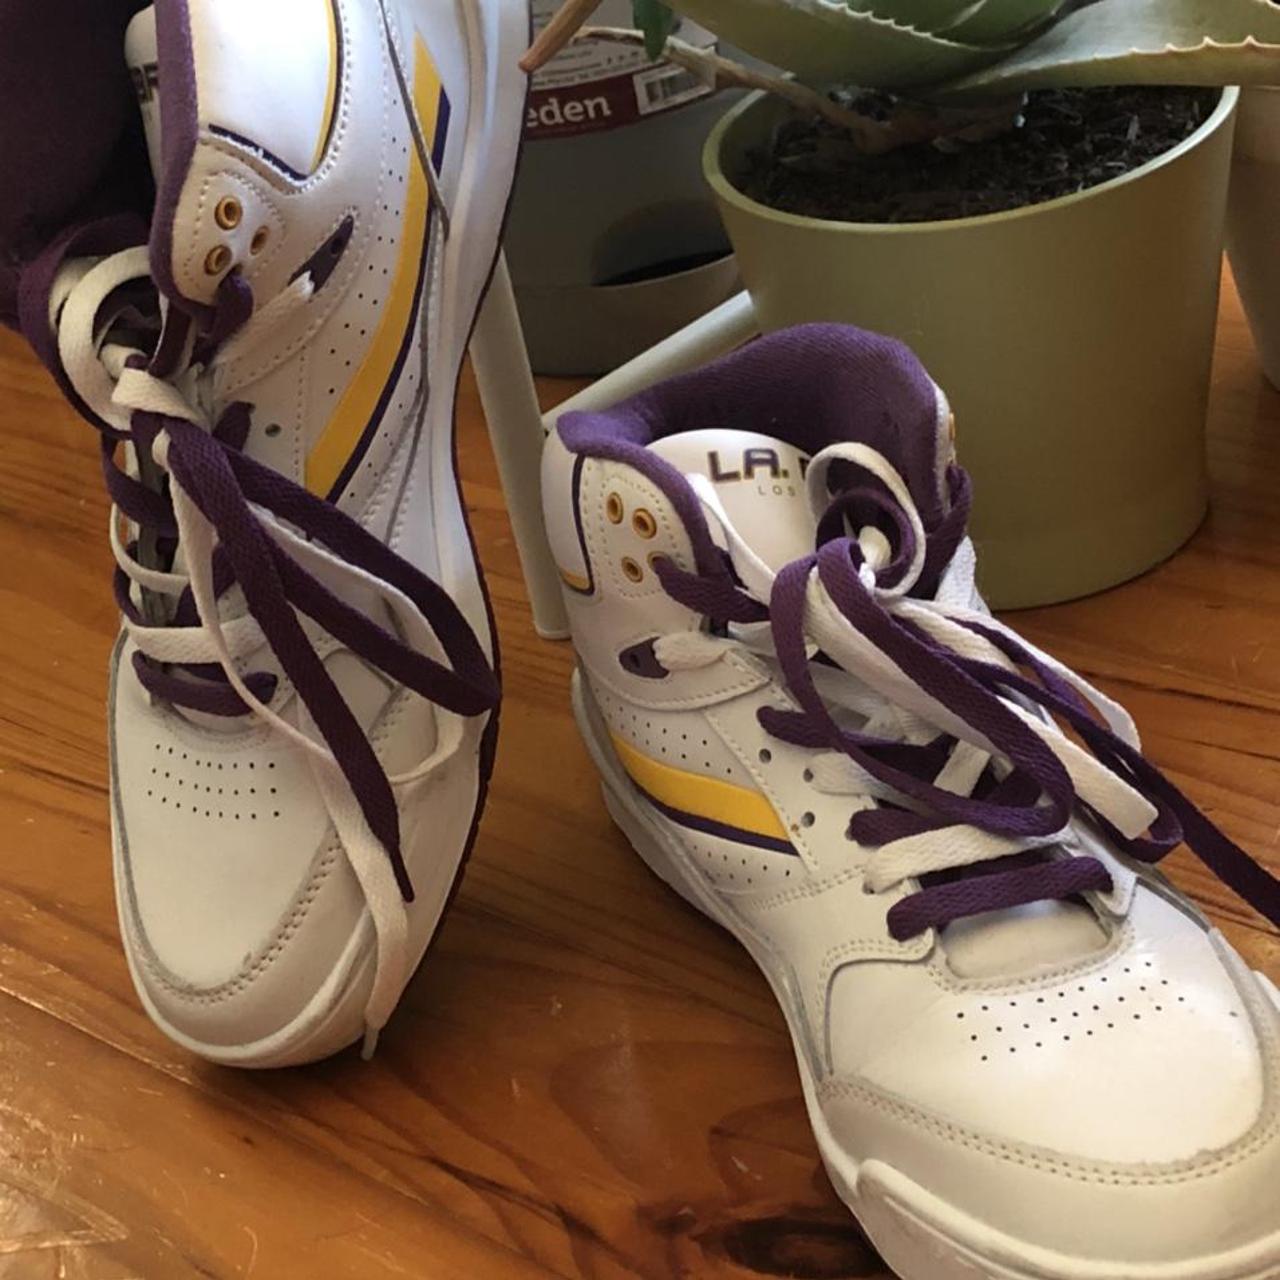 Los Angeles Lakers Custom Sport Workout Shoes - Shop trending